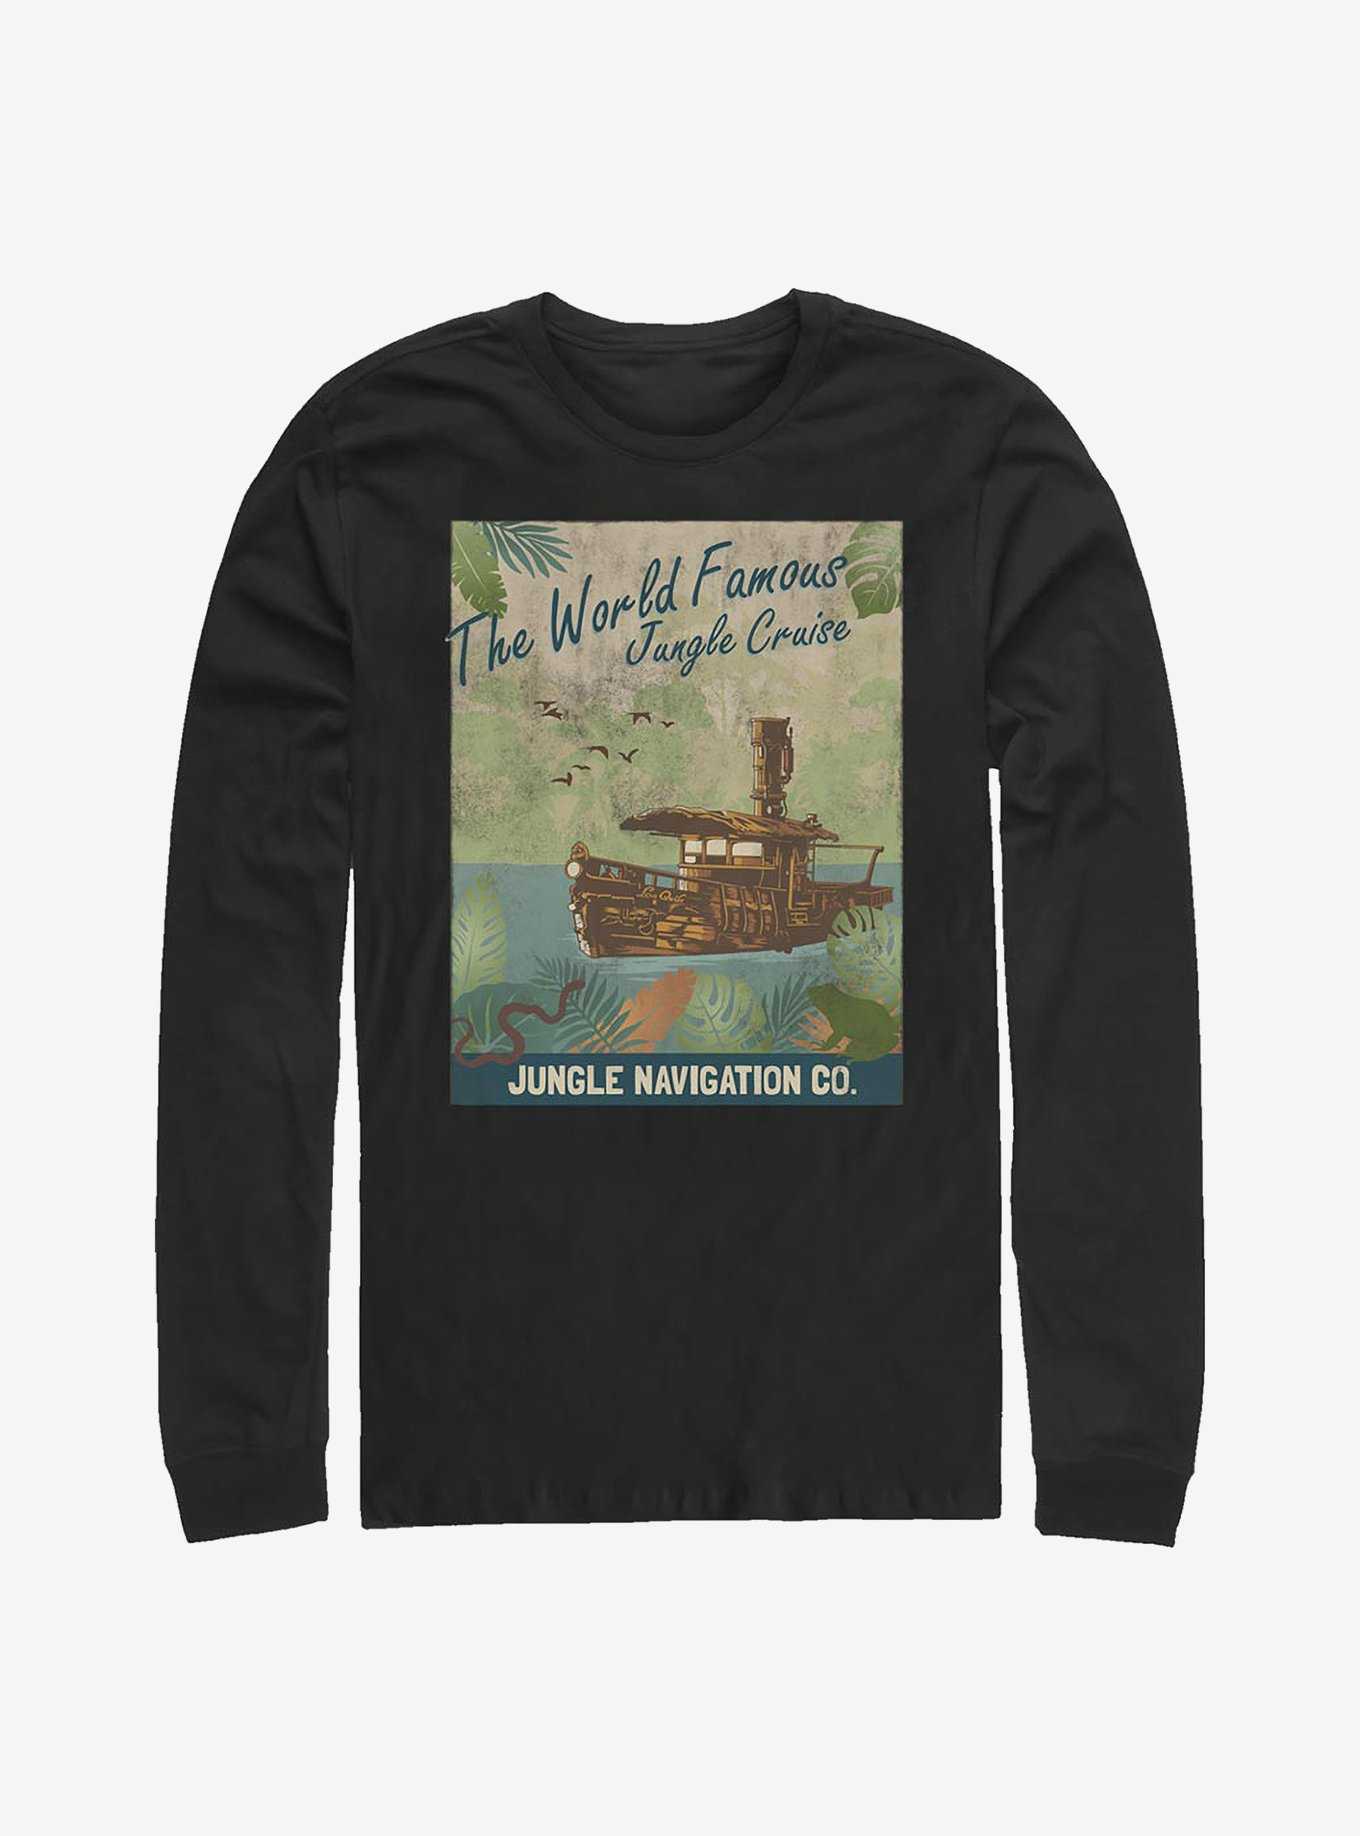 Disney Jungle Cruise Vintage Poster Long-Sleeve T-Shirt, , hi-res